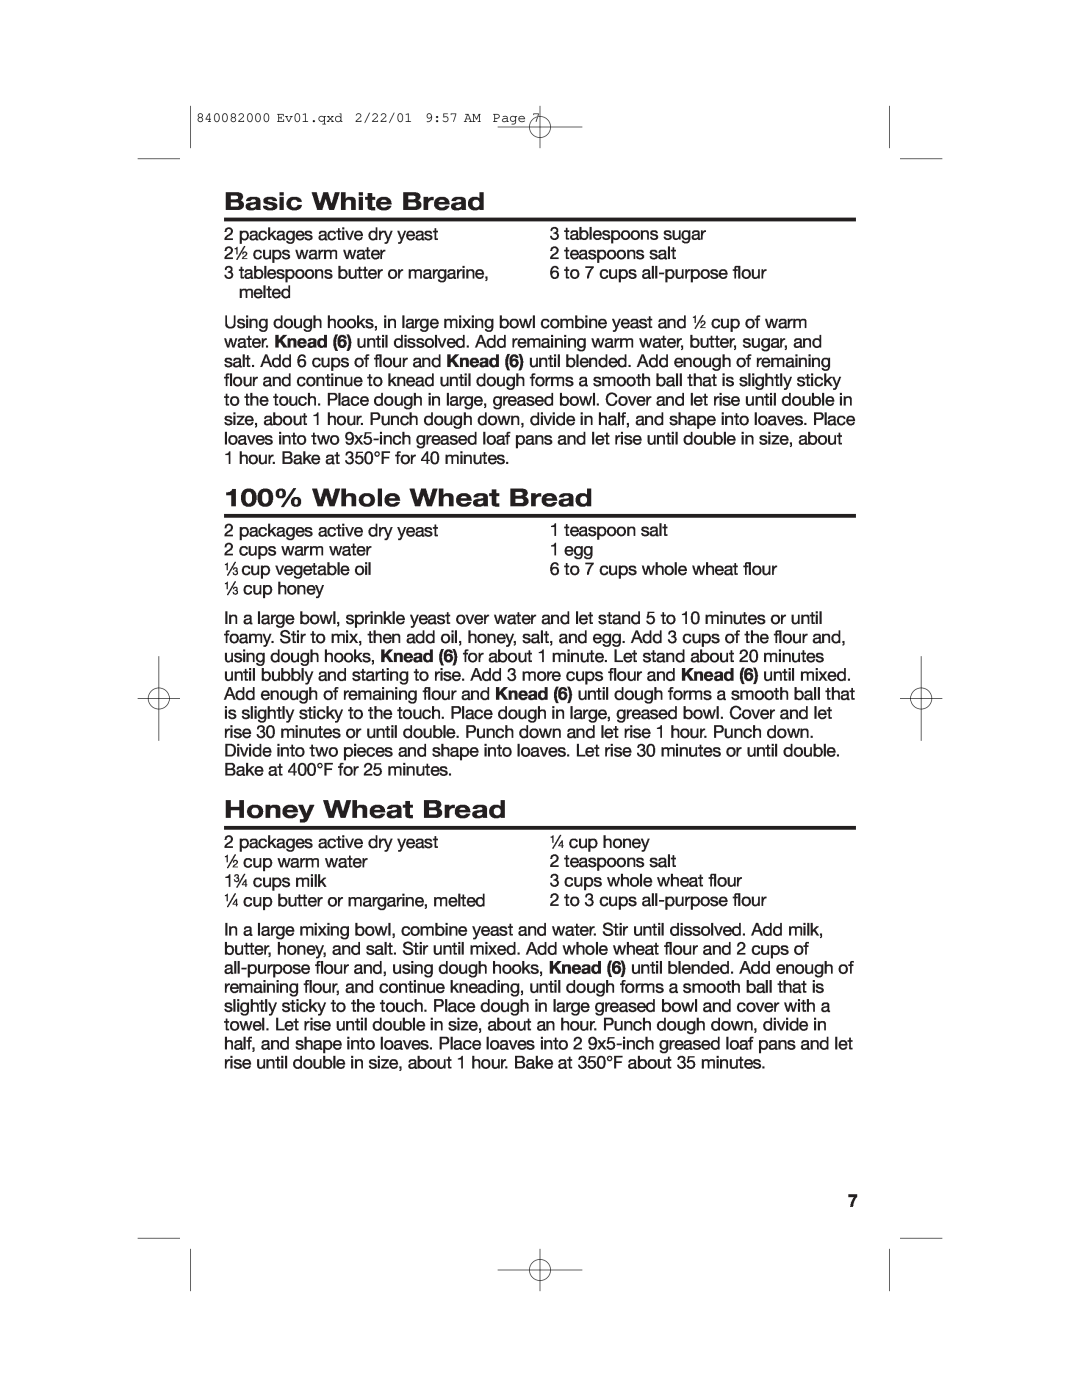 Hamilton Beach 60695 manual Basic White Bread, 100% Whole Wheat Bread, Honey Wheat Bread 